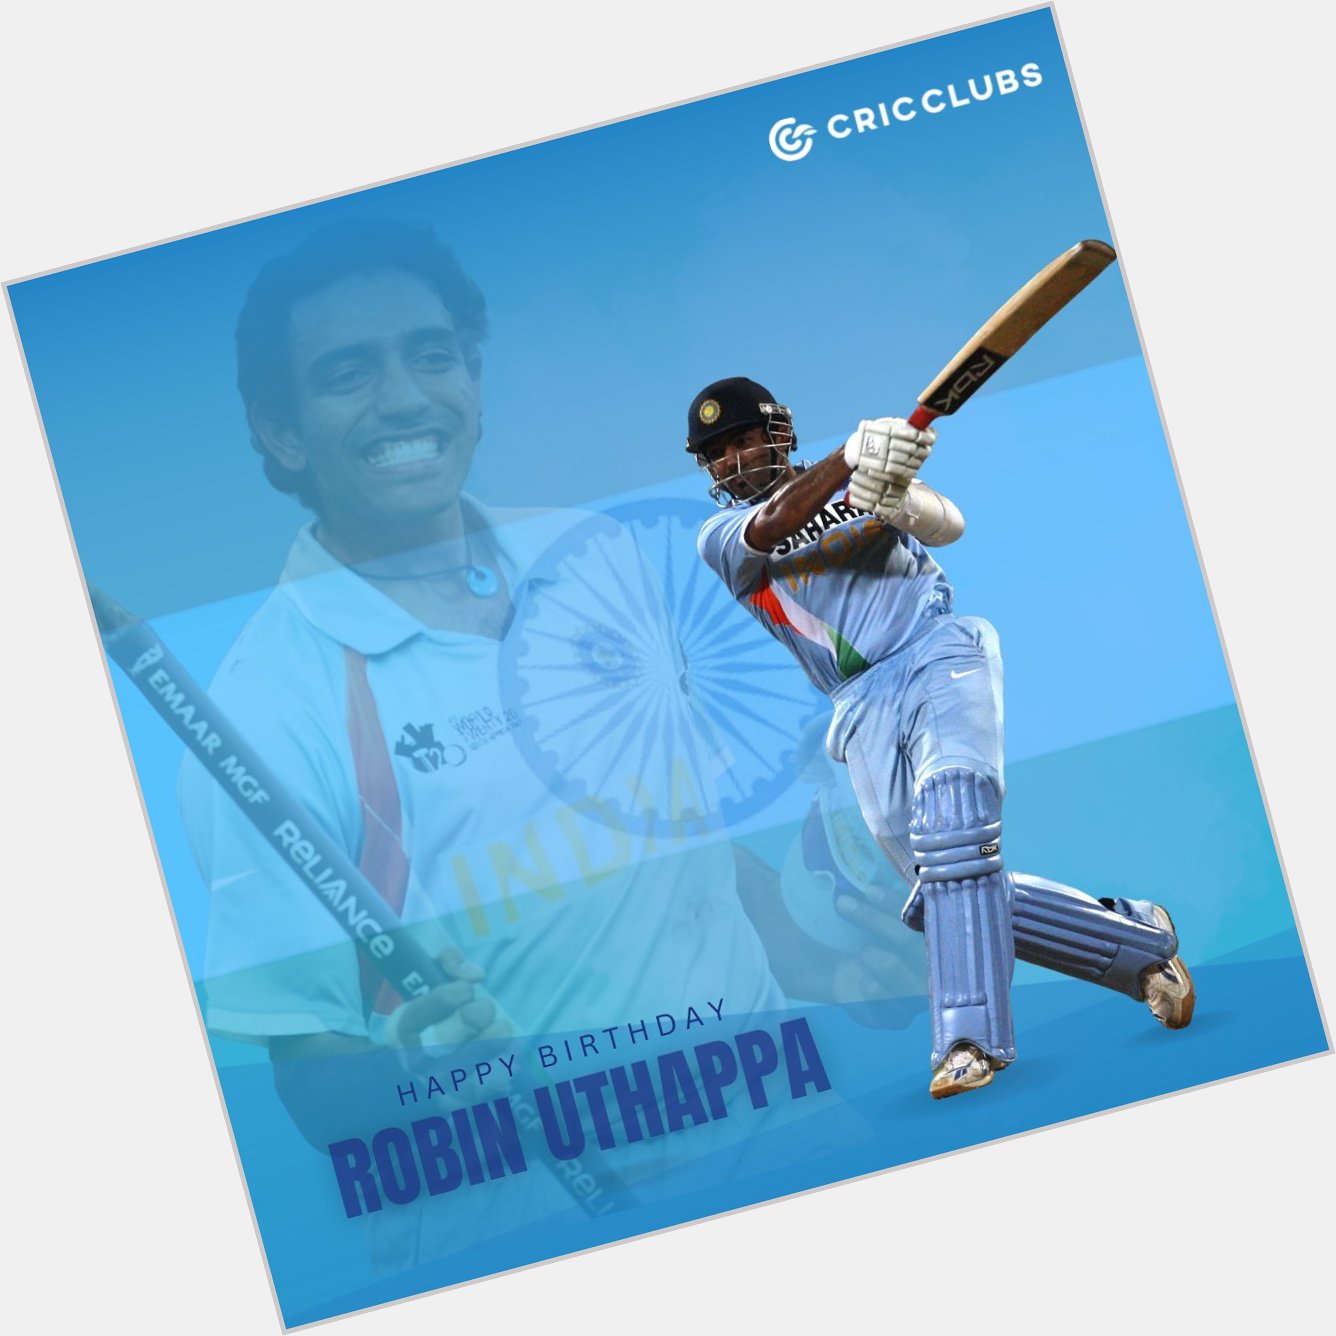 Wishing Former Indian cricketer Robin Uthappa a very happy birthday 